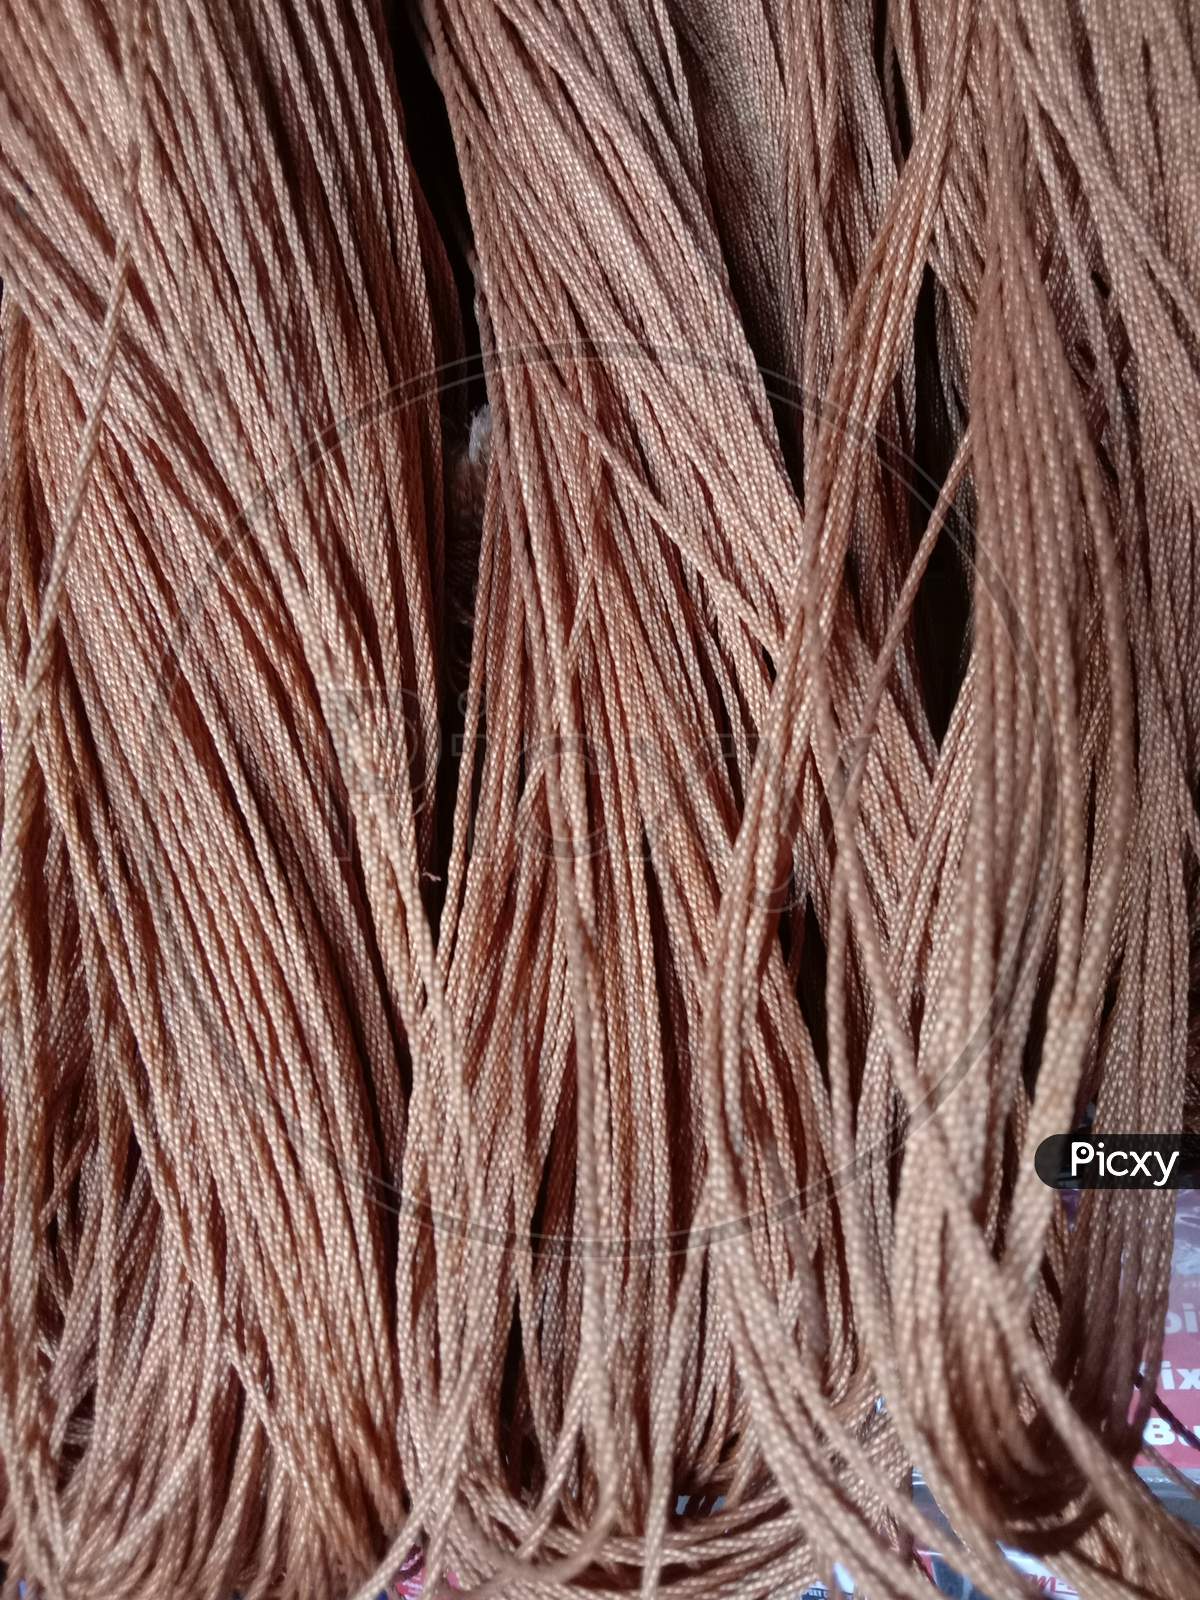 Chocolate Colored Nylon Yarn Closeup